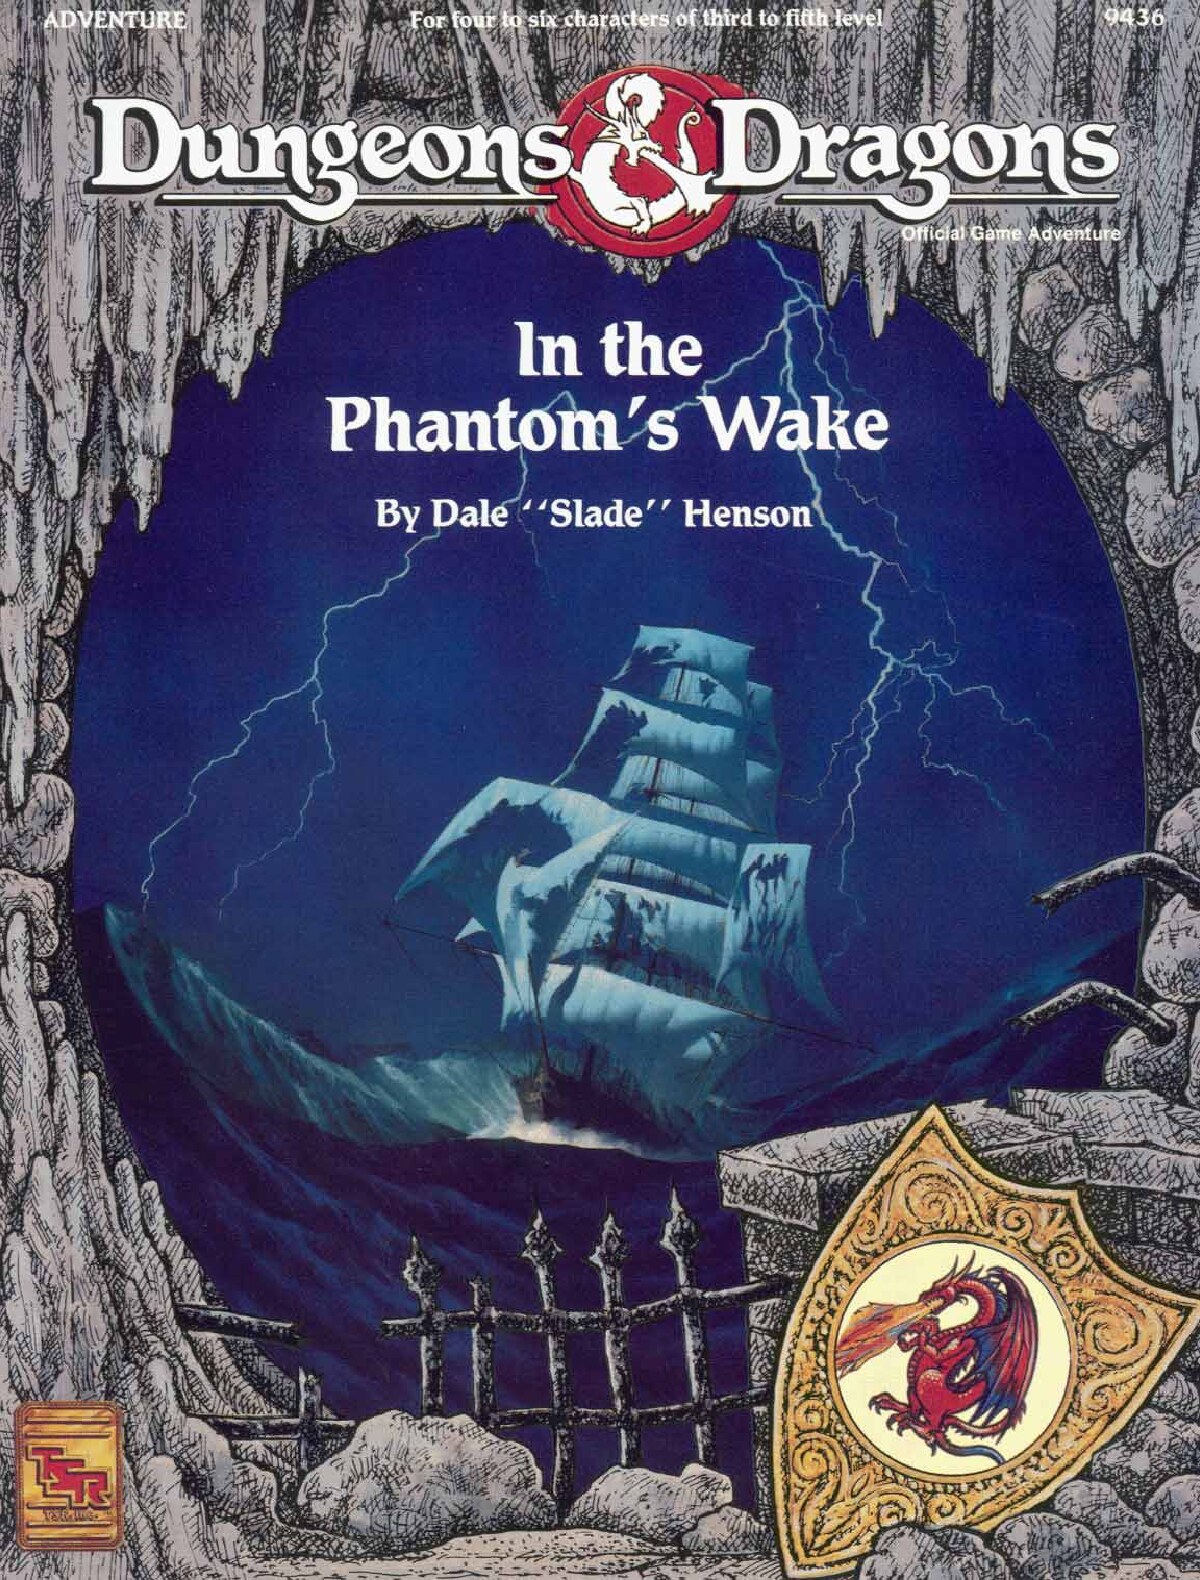 TSR 9436 In the Phantom's Wake